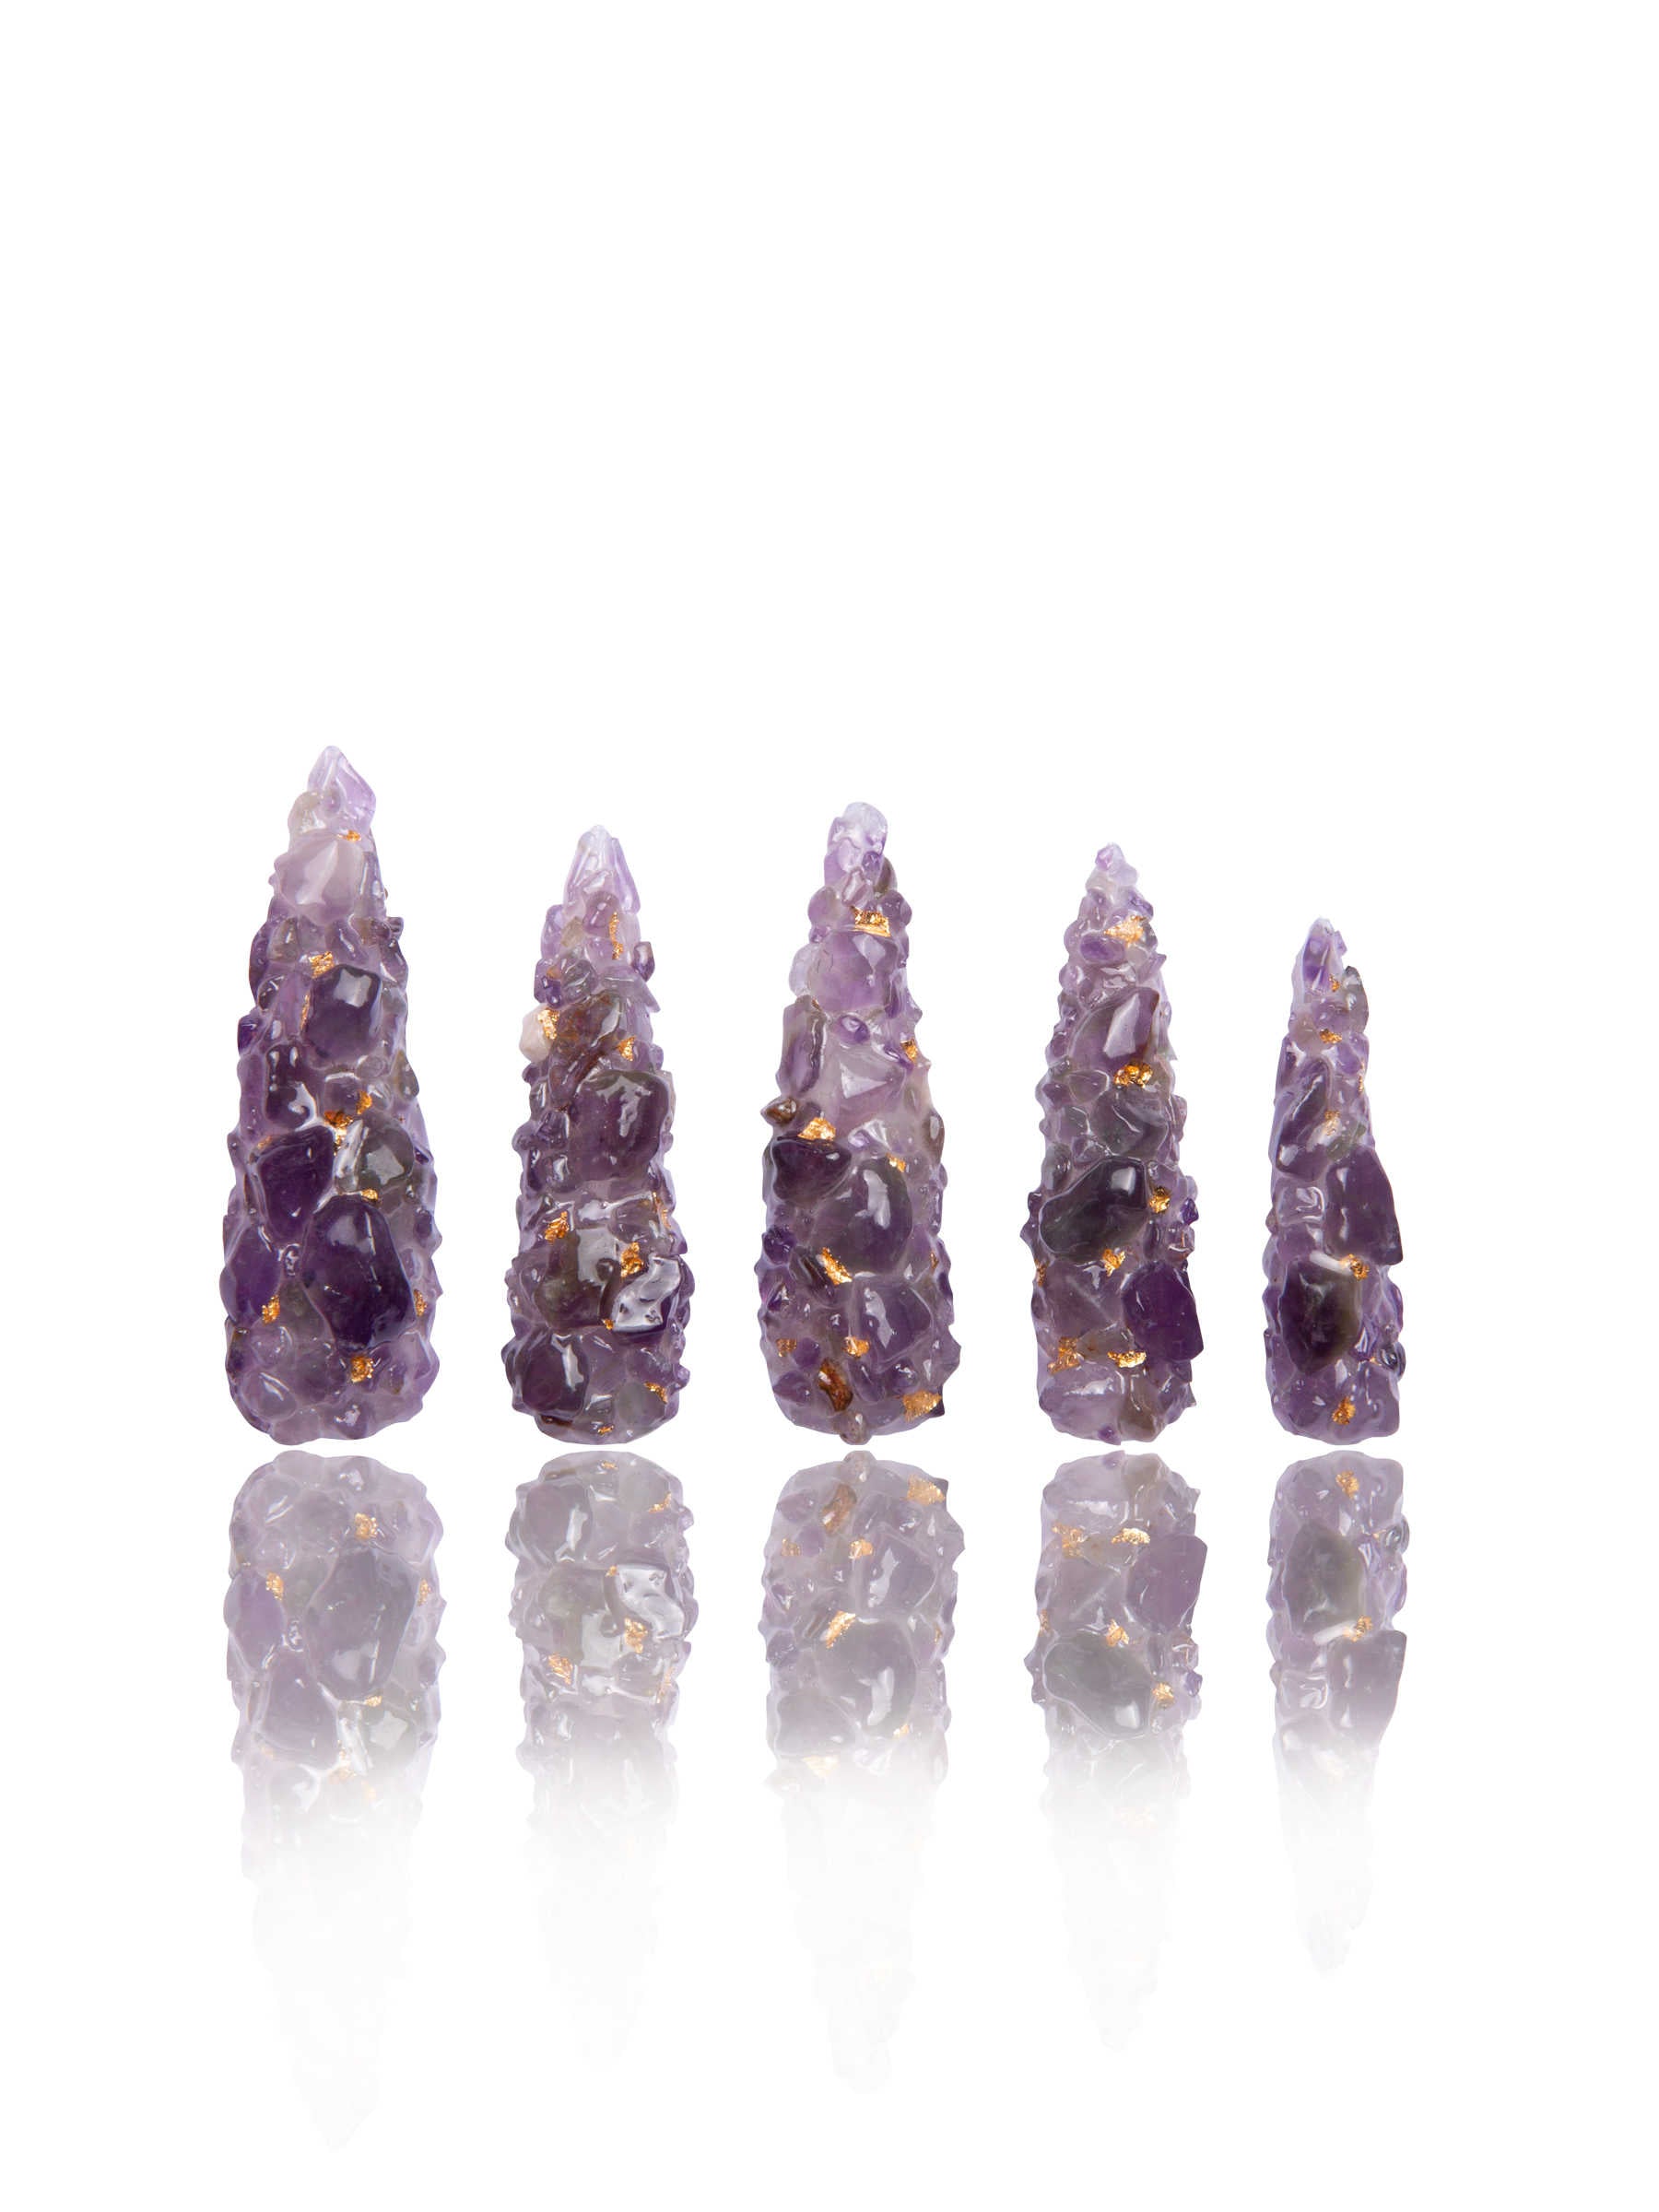 H181 - Purple Amethyst Crystal